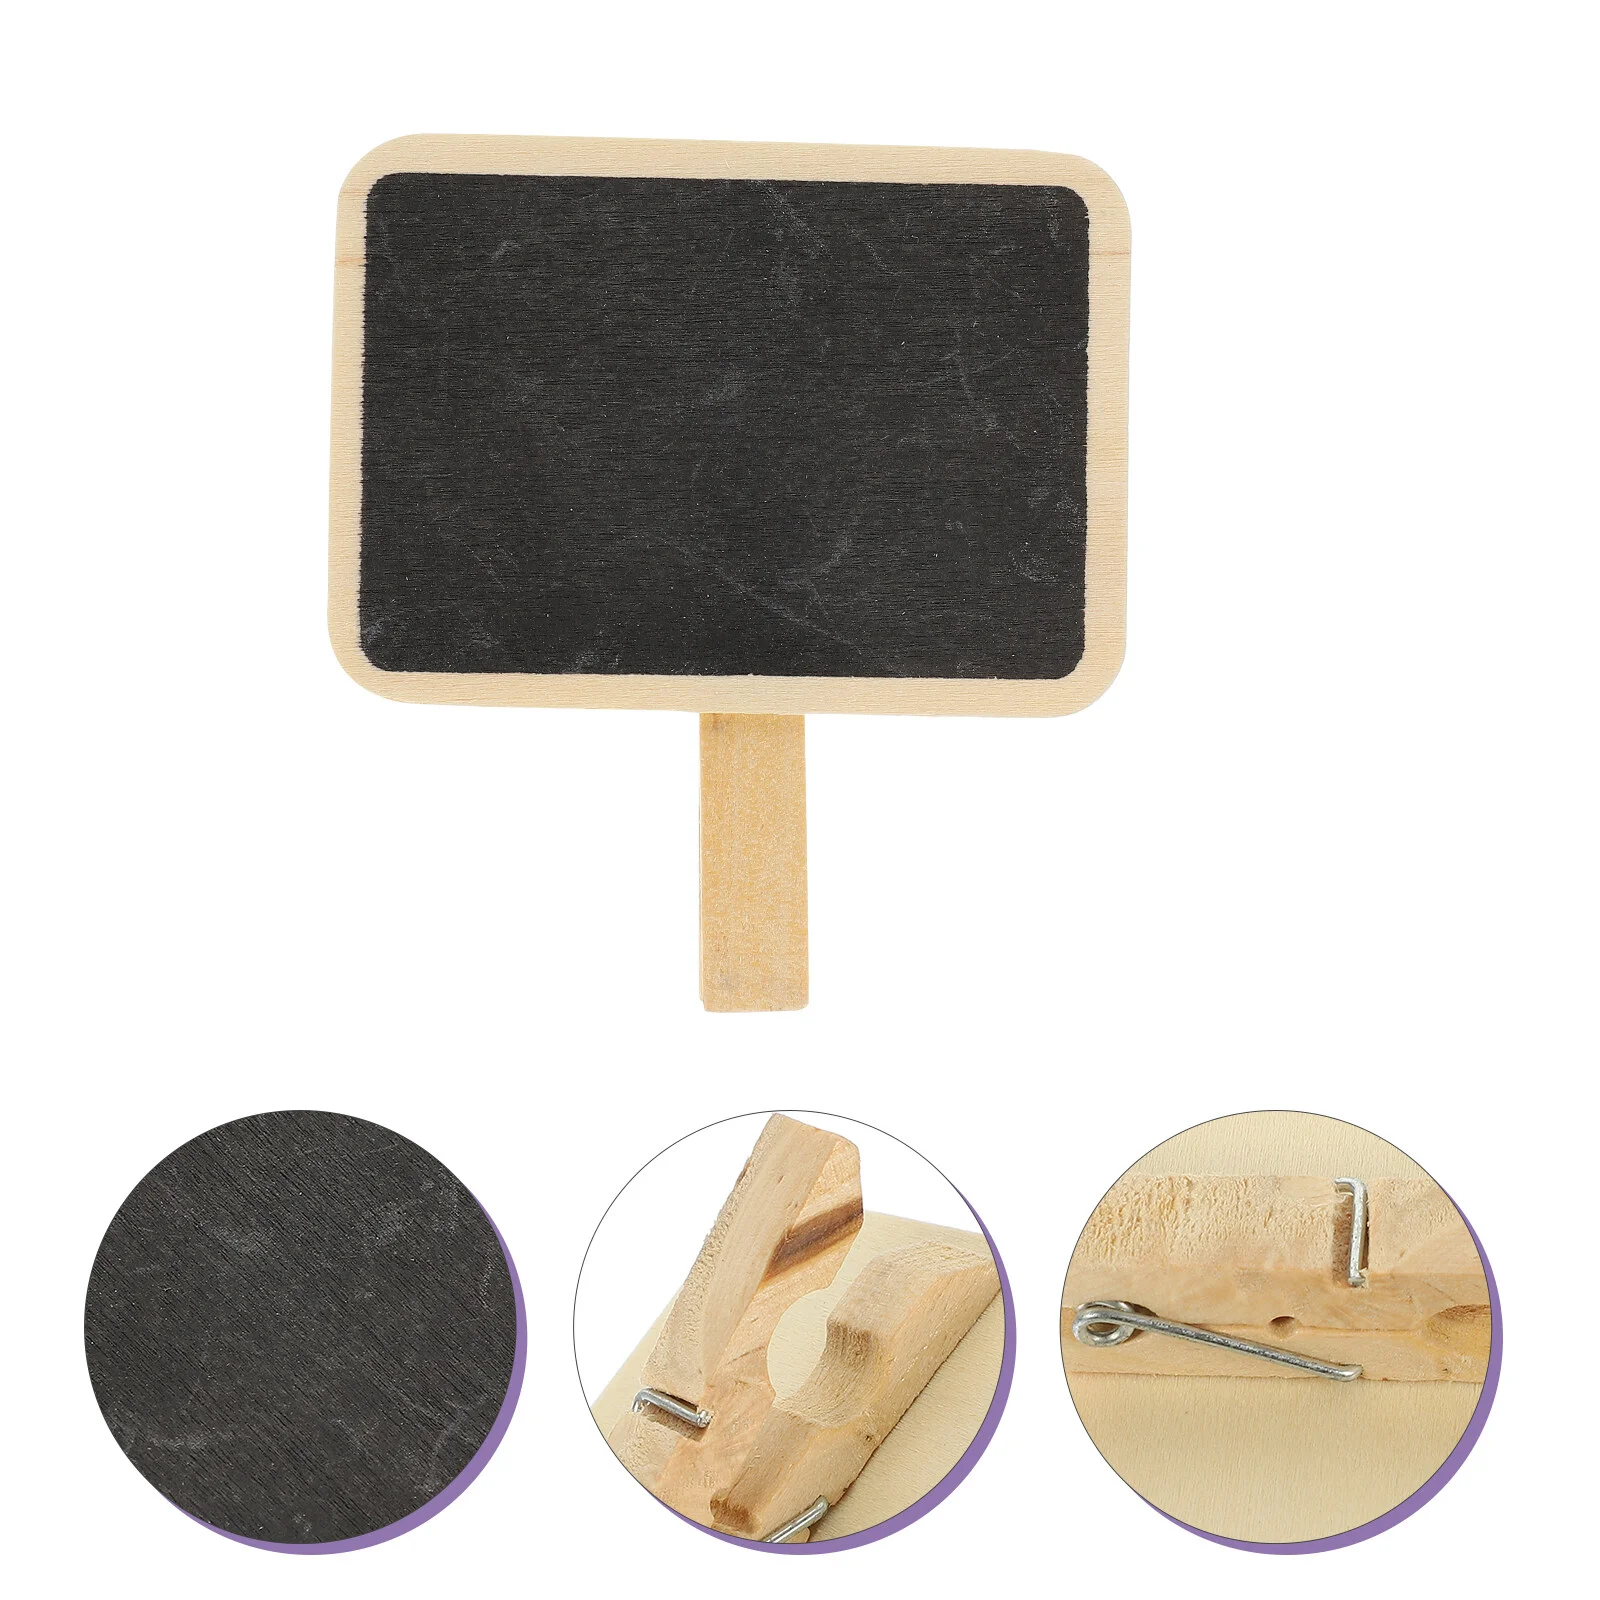 

10 Pcs Mini Chalkboard Wooden Plywood Message Clip Blackboard Clamps Markers Multifunction Little Memo Clips